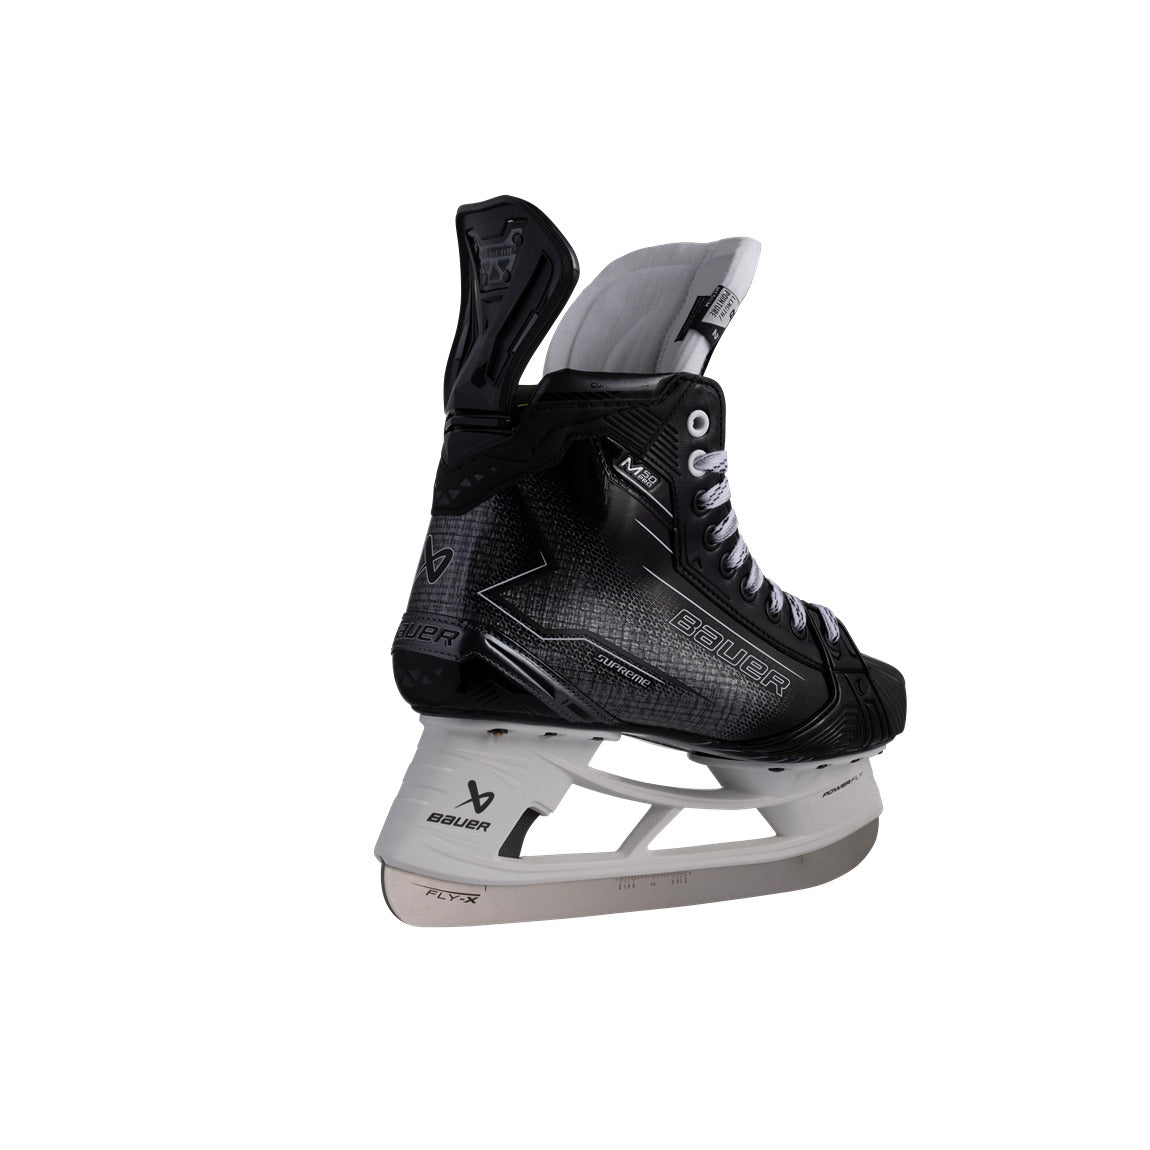 Bauer Supreme M50 Pro Hockey Skates - Intermediate